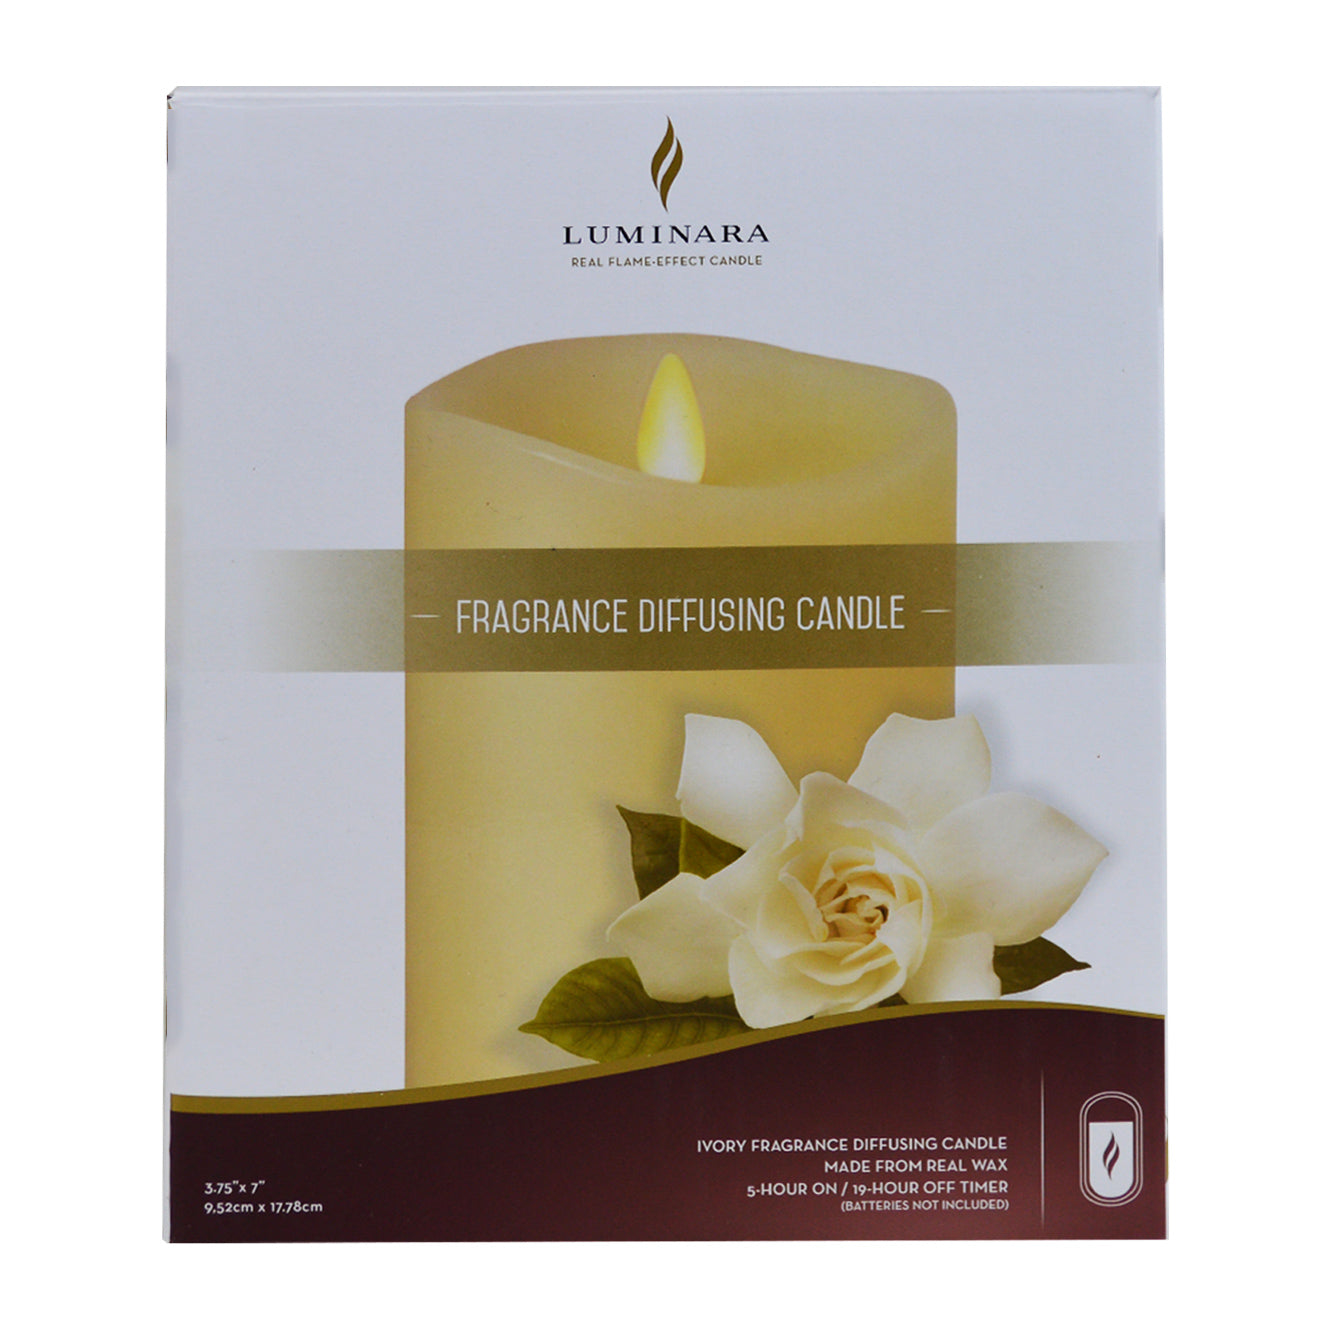 Luminara Fragrance Diffusing Pillar Candle in a Gift Box - 1 x Indoor Pillar / 2 x Lavender Pods / 2 x Sea Min Mist Pods